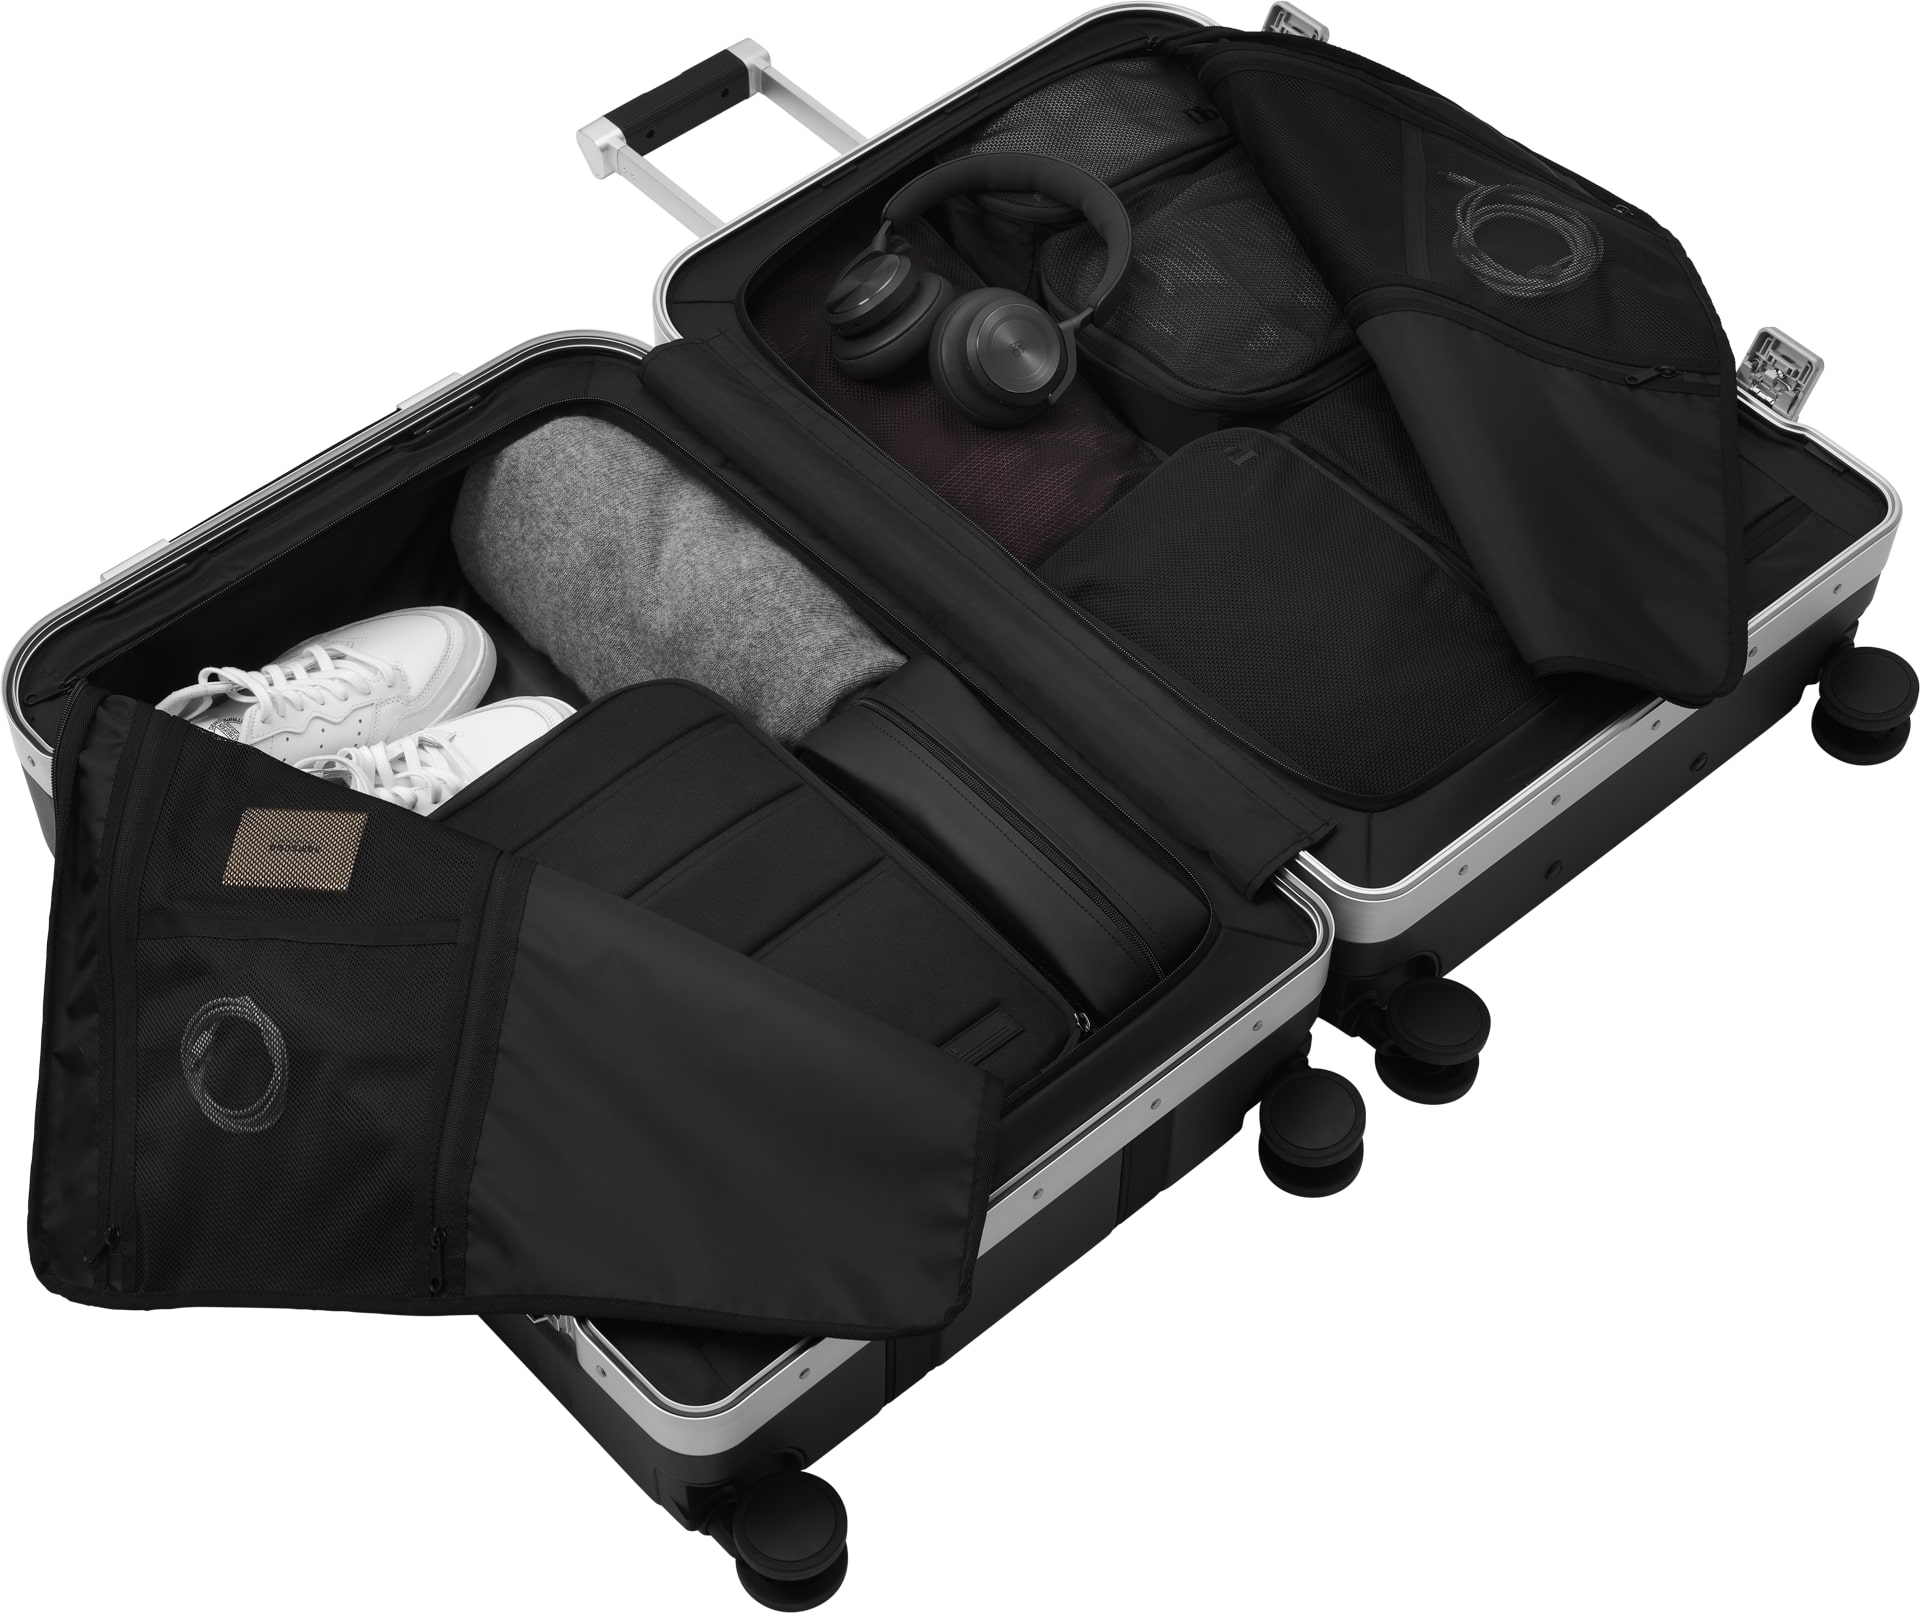 Douchebags Ramverk Pro Check-in Luggage Large - 87 Liter